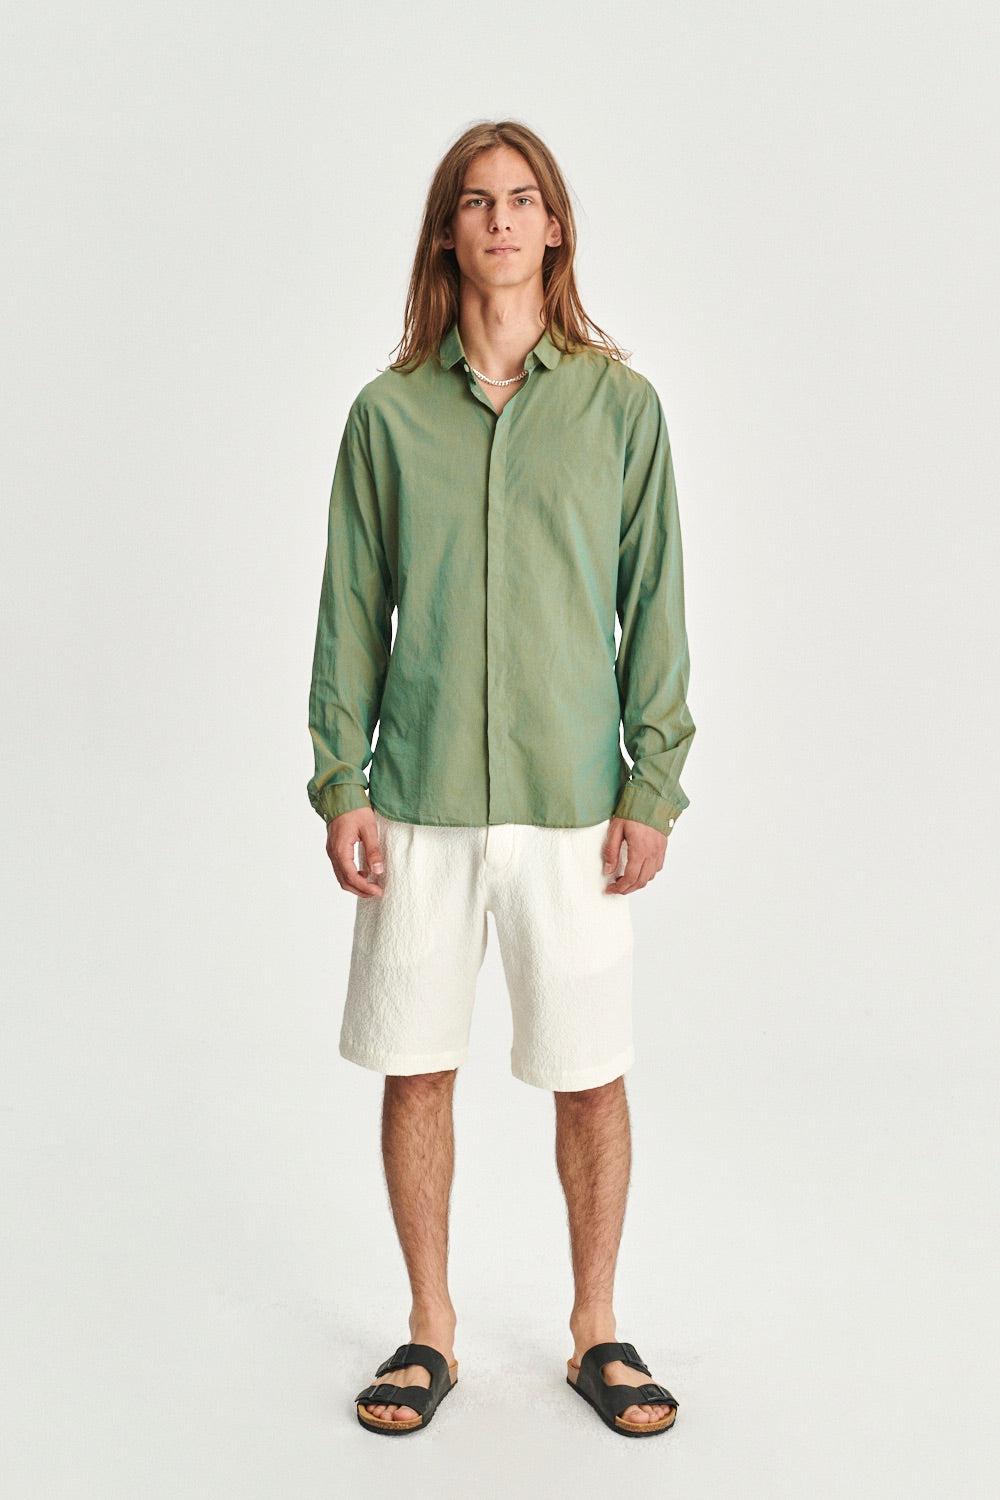 Albini の切り替え可能なグリーンの高級イタリアンコットンを使用したキュートなラウンドカラーシャツ